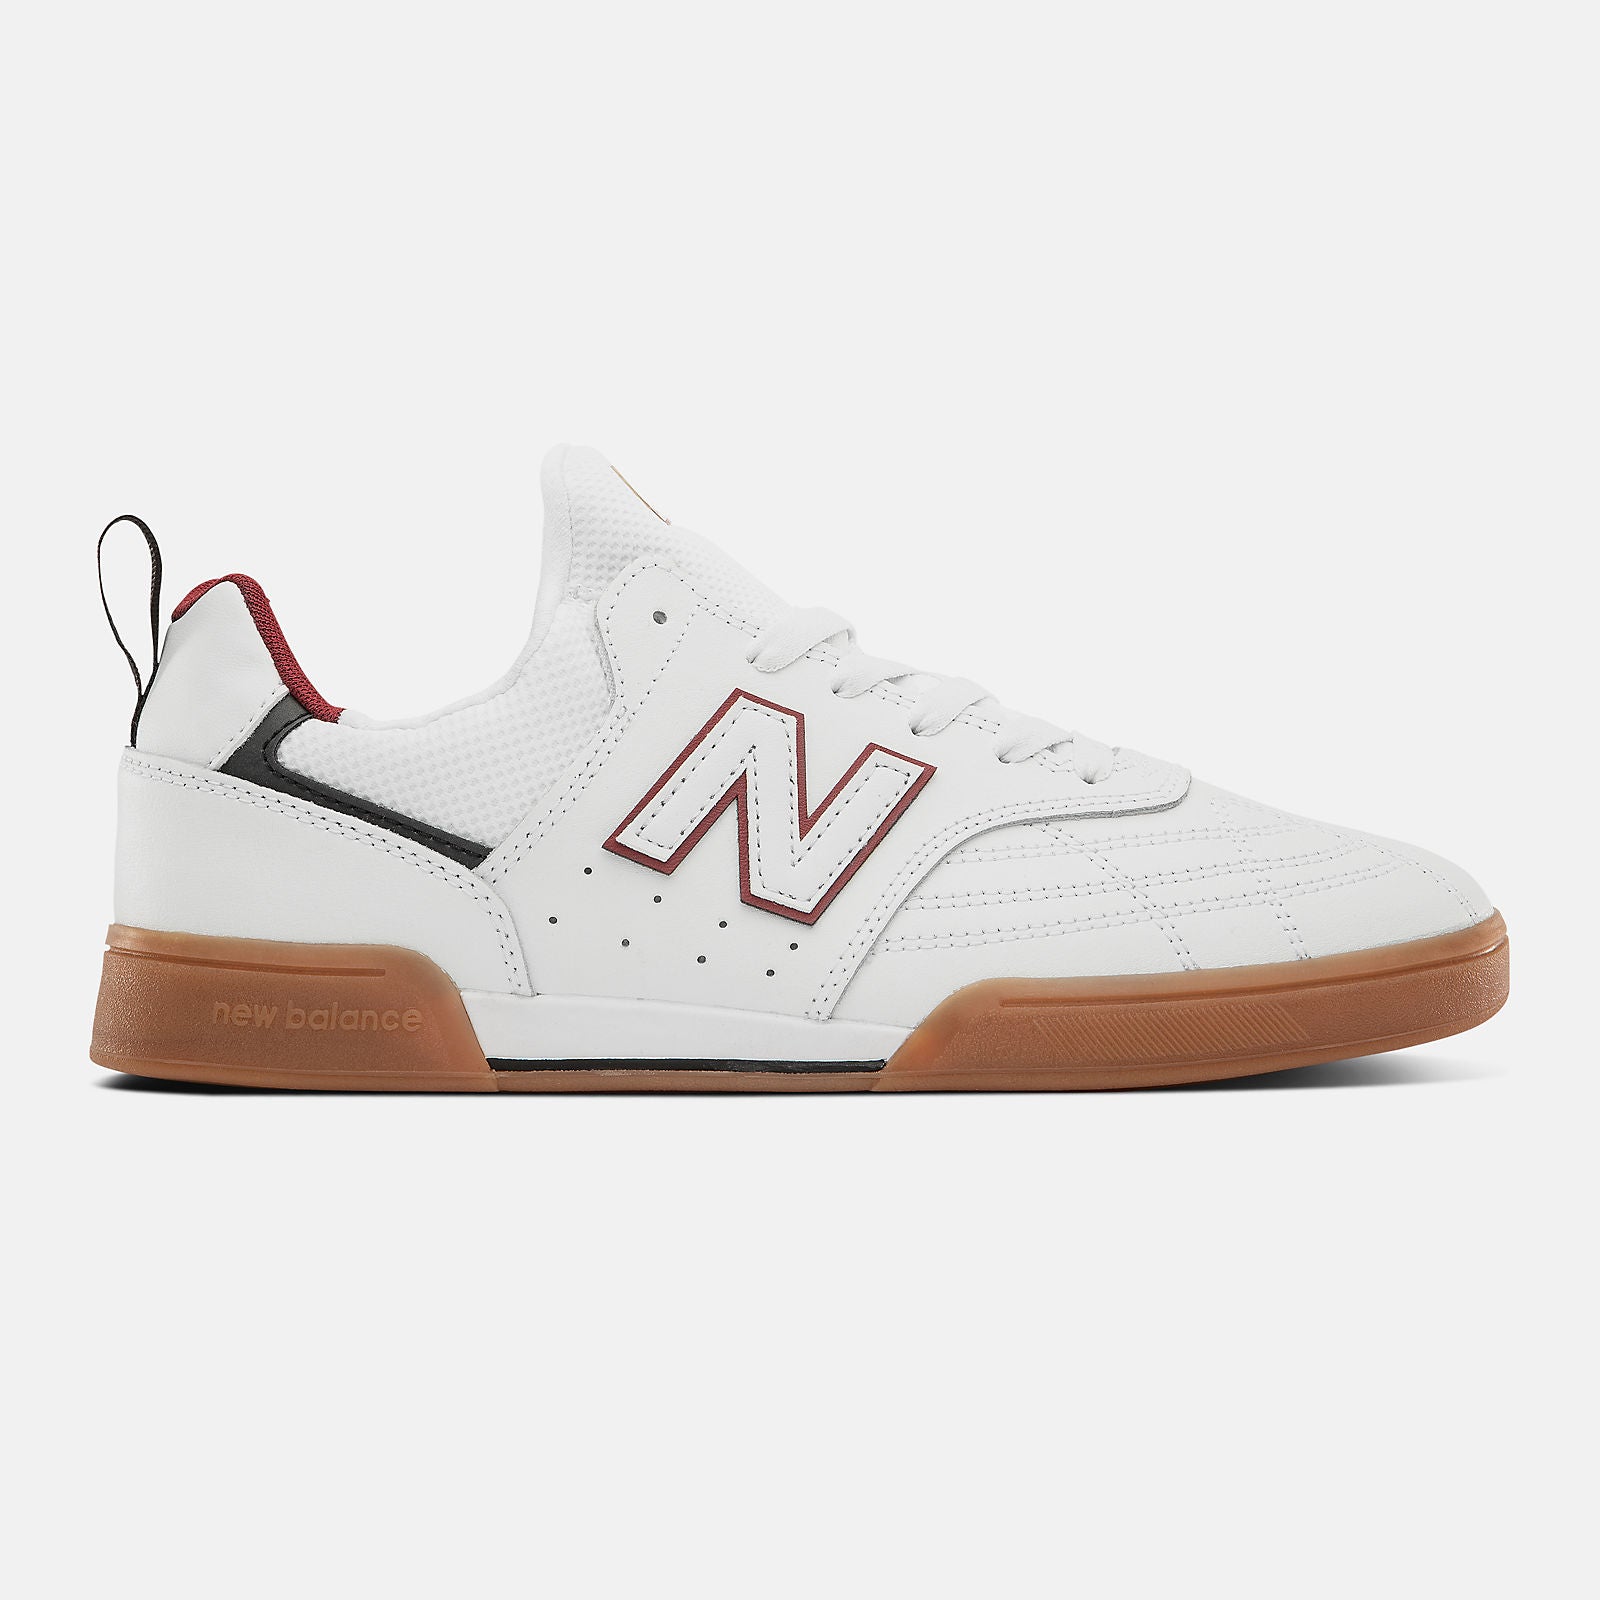 White Leather NM288SWL NB Numeric Skateboard Shoe